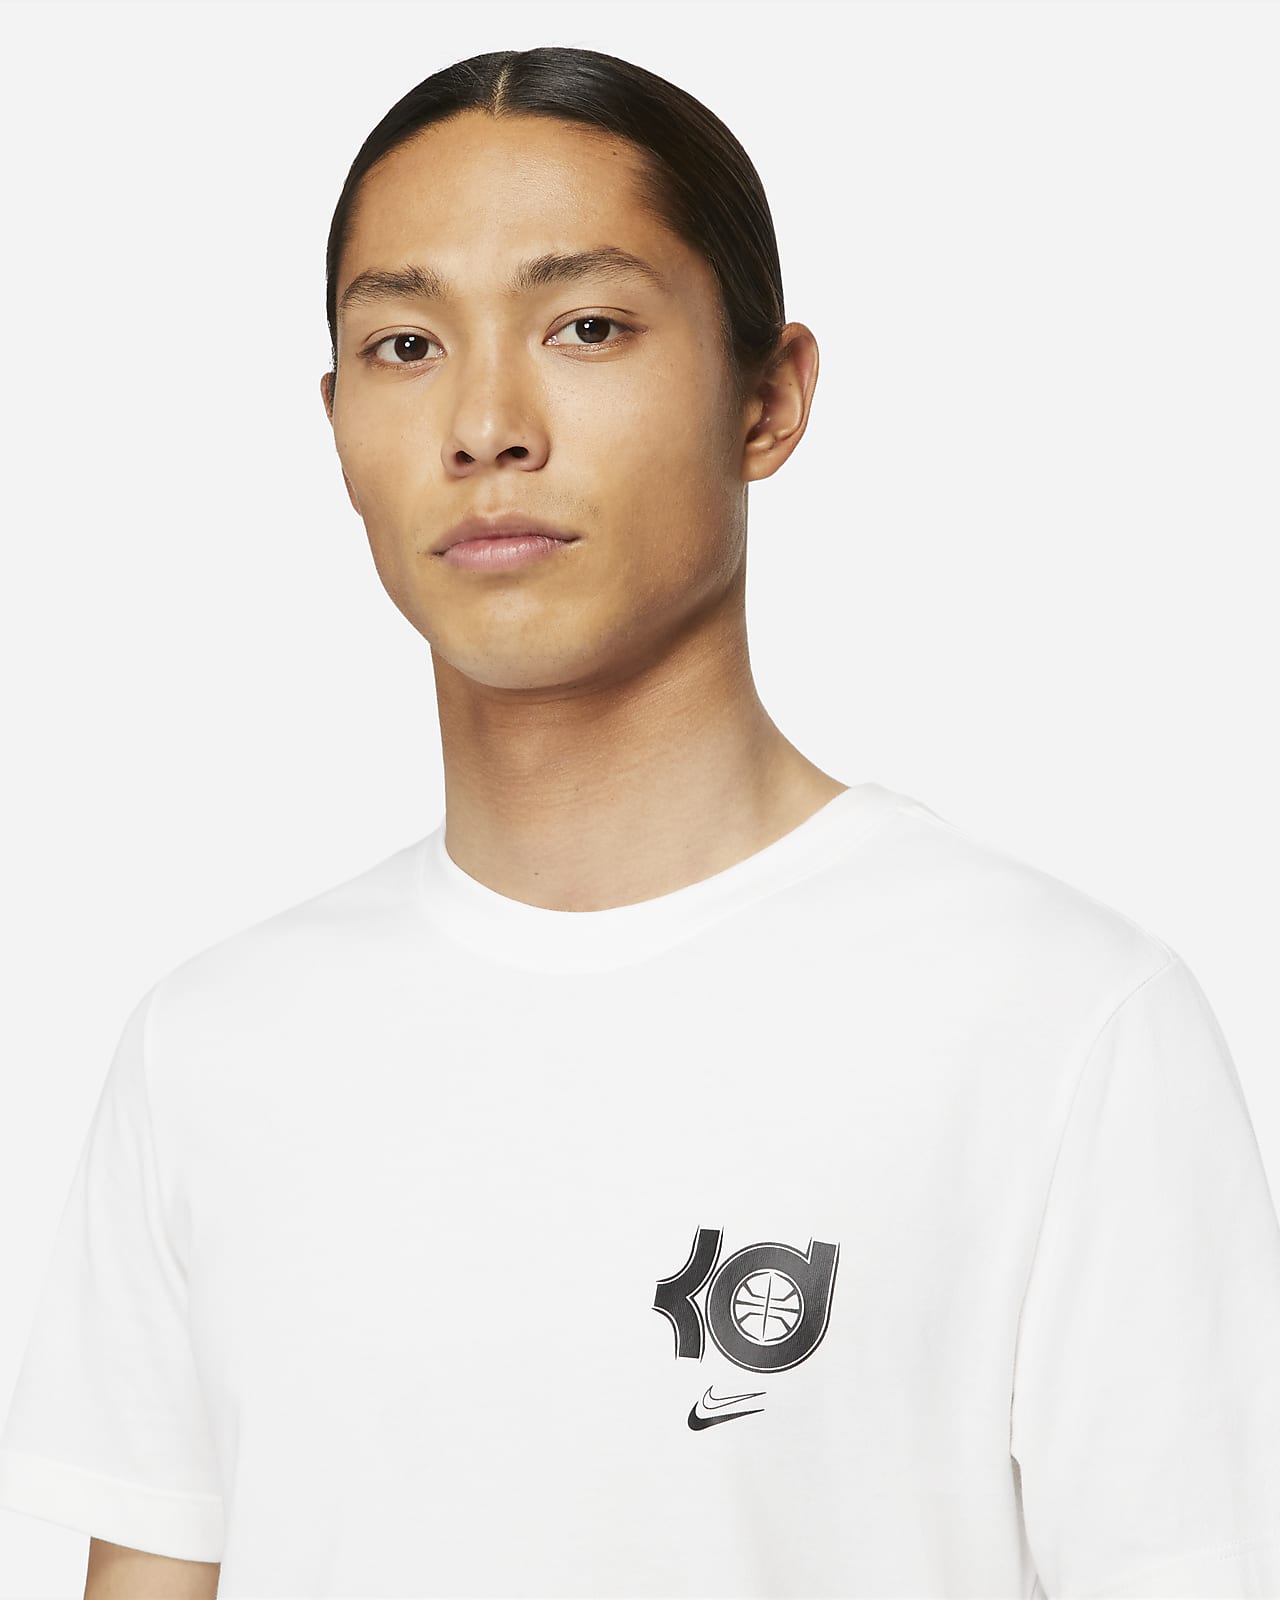 Nike公式 ナイキ Dri Fit Kd ロゴ メンズ バスケットボール Tシャツ オンラインストア 通販サイト